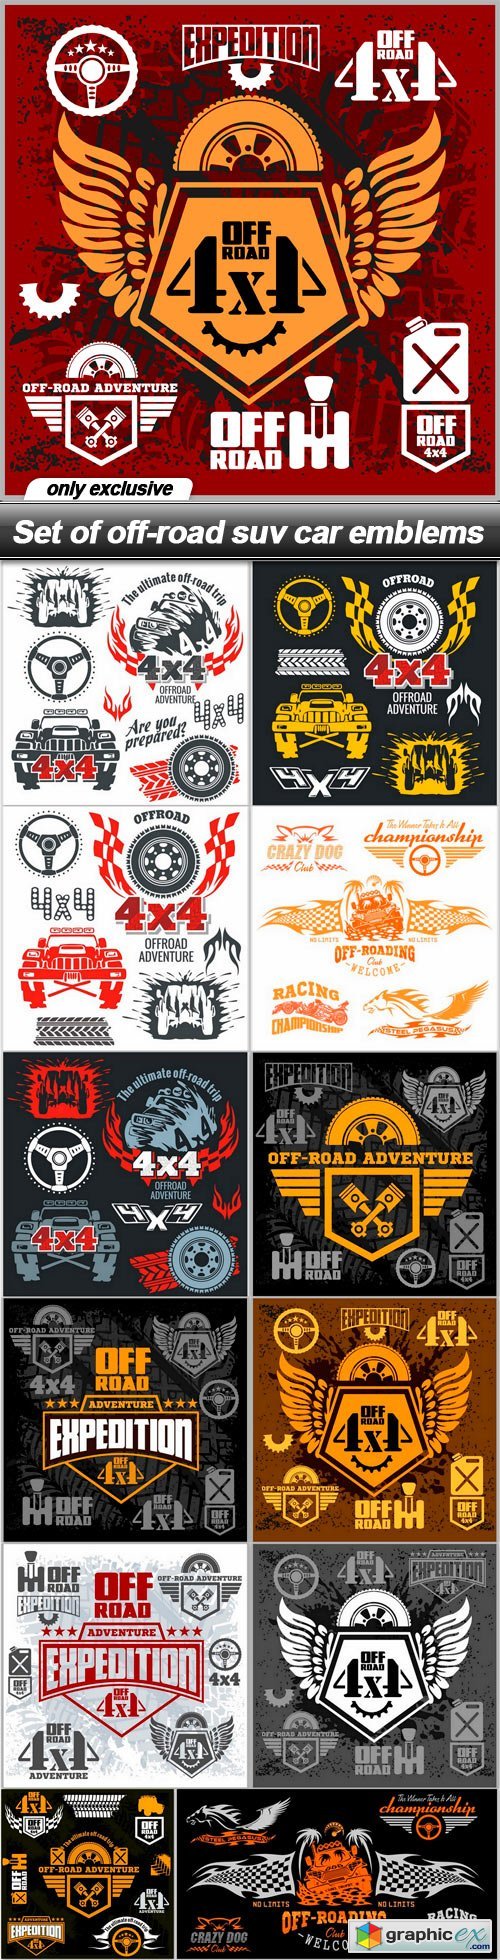 Set of off-road suv car emblems - 13 EPS